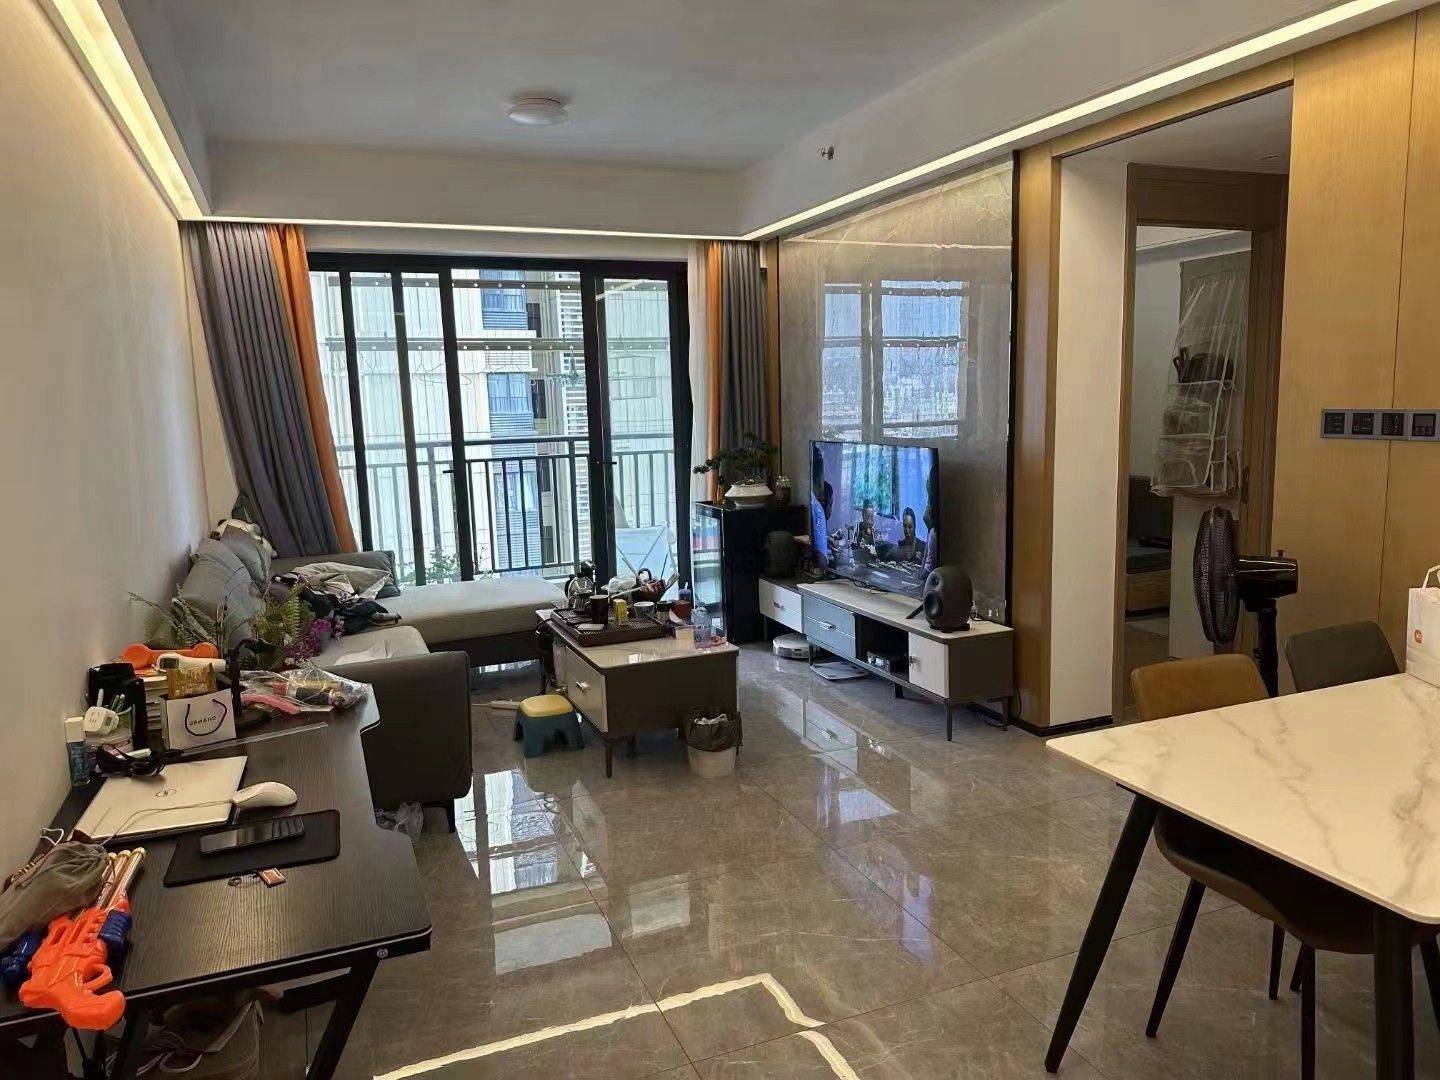 Shenzhen-Longgang-Cozy Home,Clean&Comfy,No Gender Limit,Hustle & Bustle,Chilled,LGBTQ Friendly,Pet Friendly